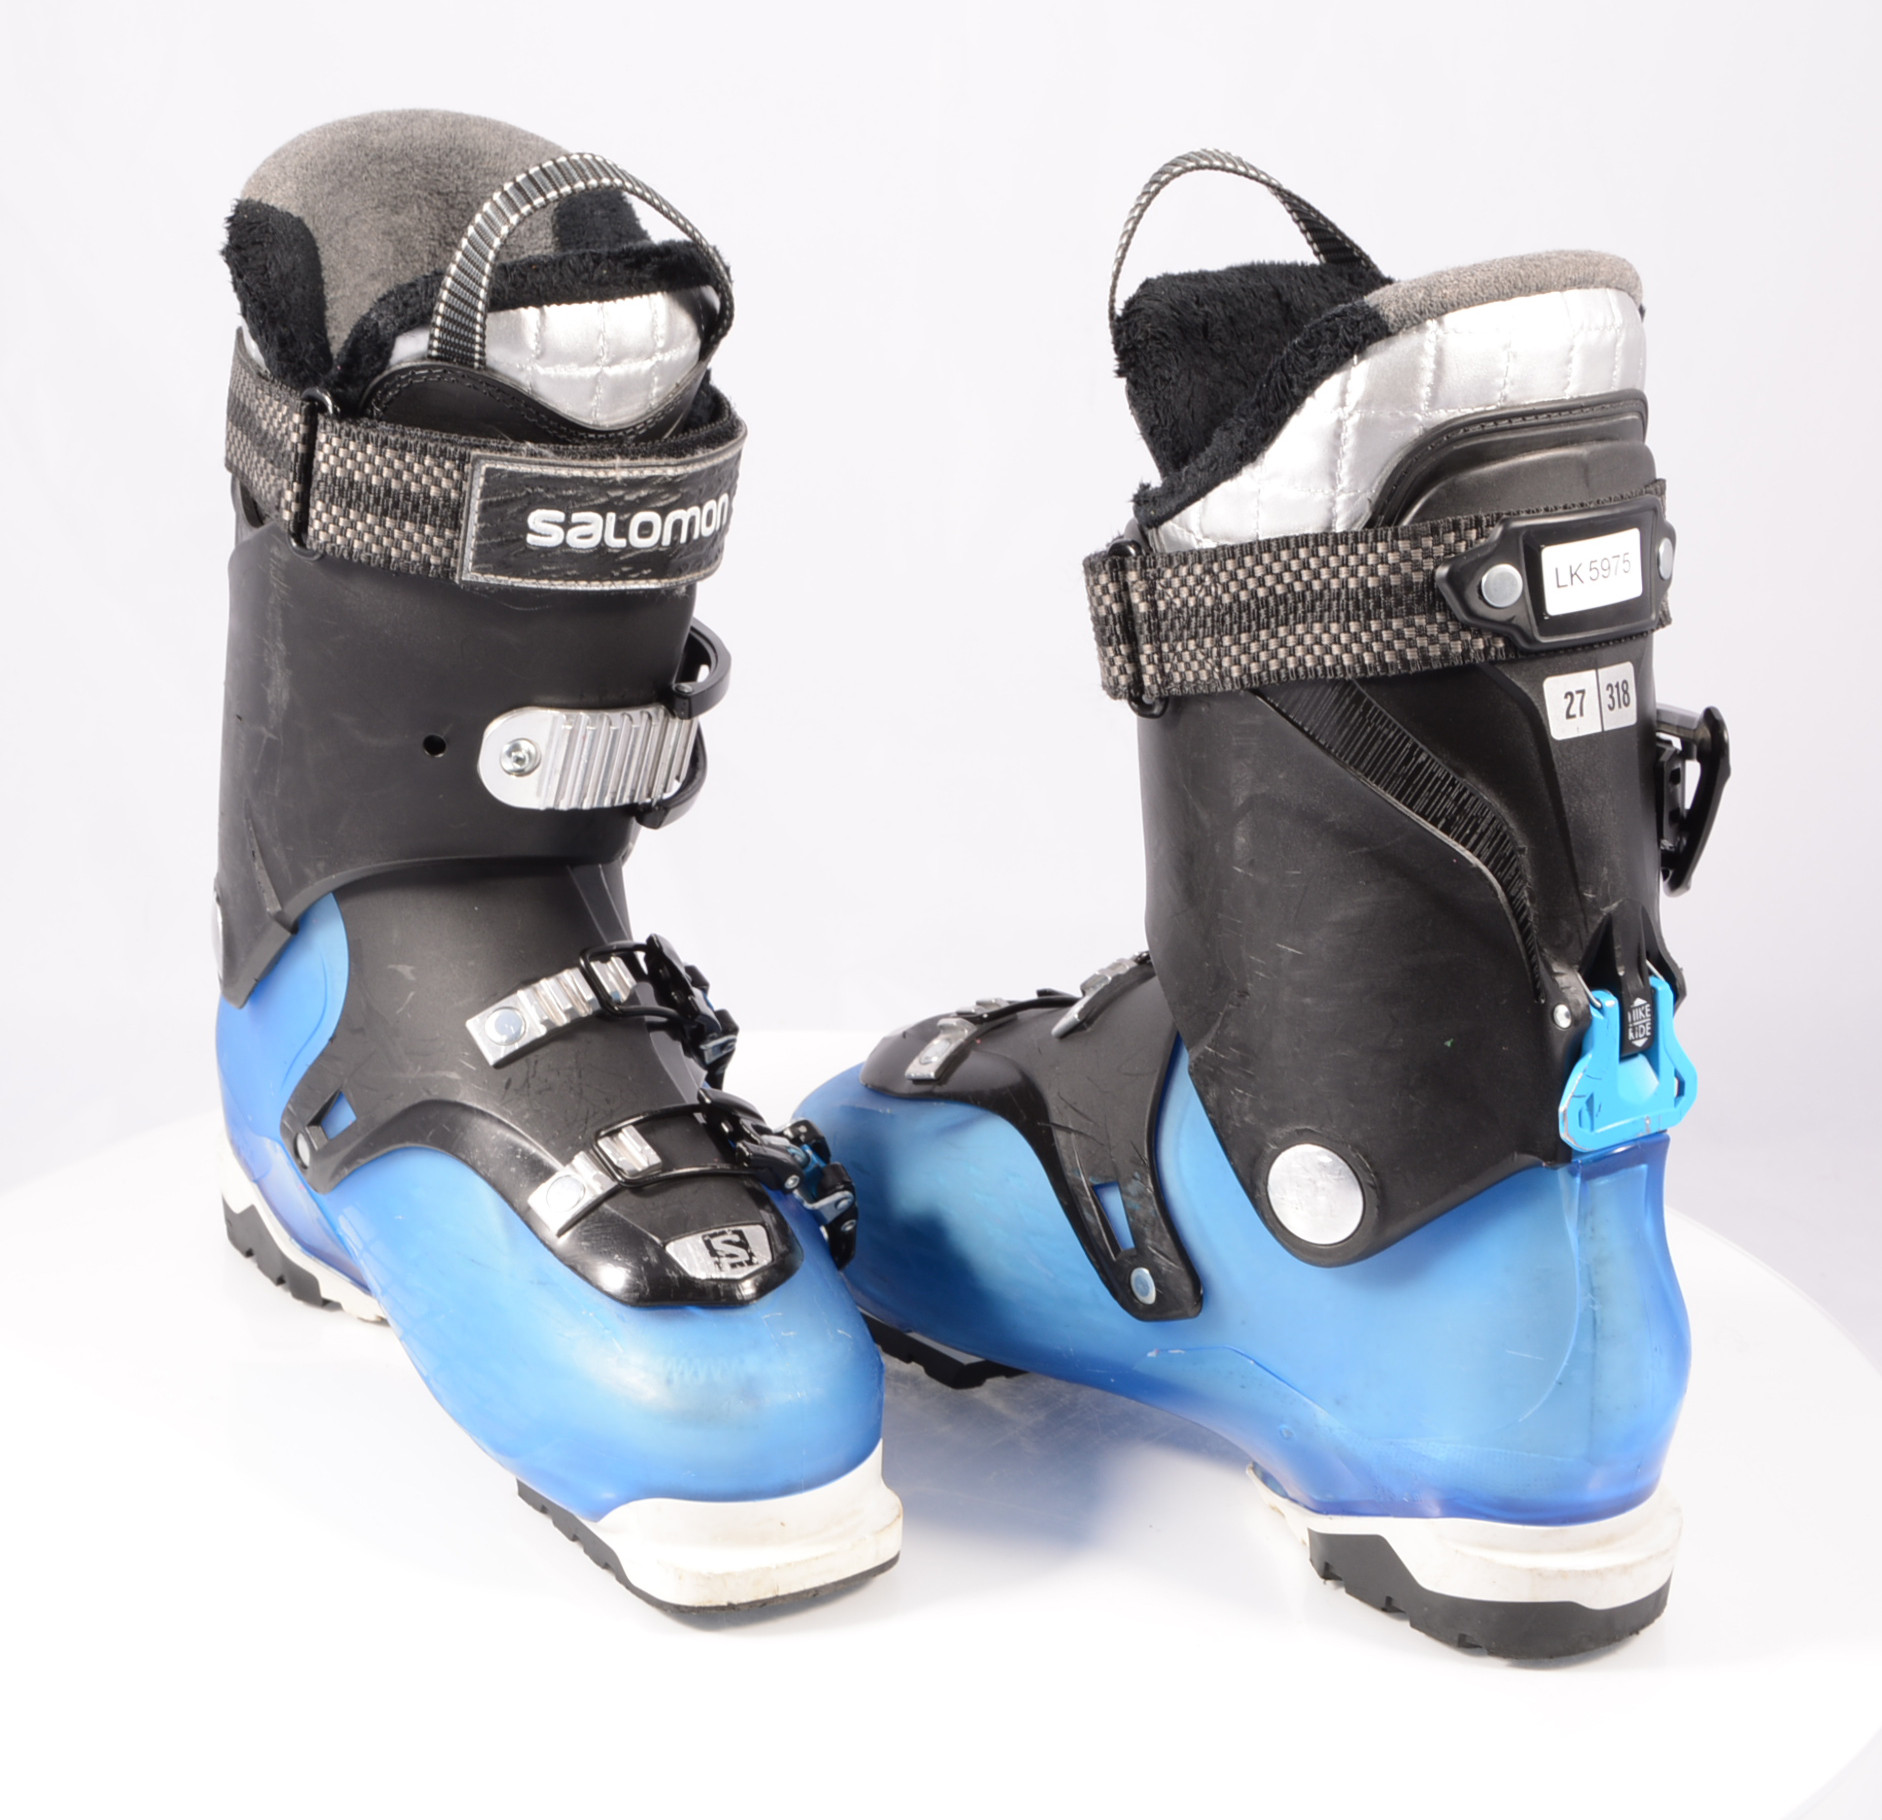 ski boots SALOMON QUEST ACCESS BLUE/black, SKI/WALK mode, micro, RATCHET buckle ( TOP condition ) - Mardosport.com